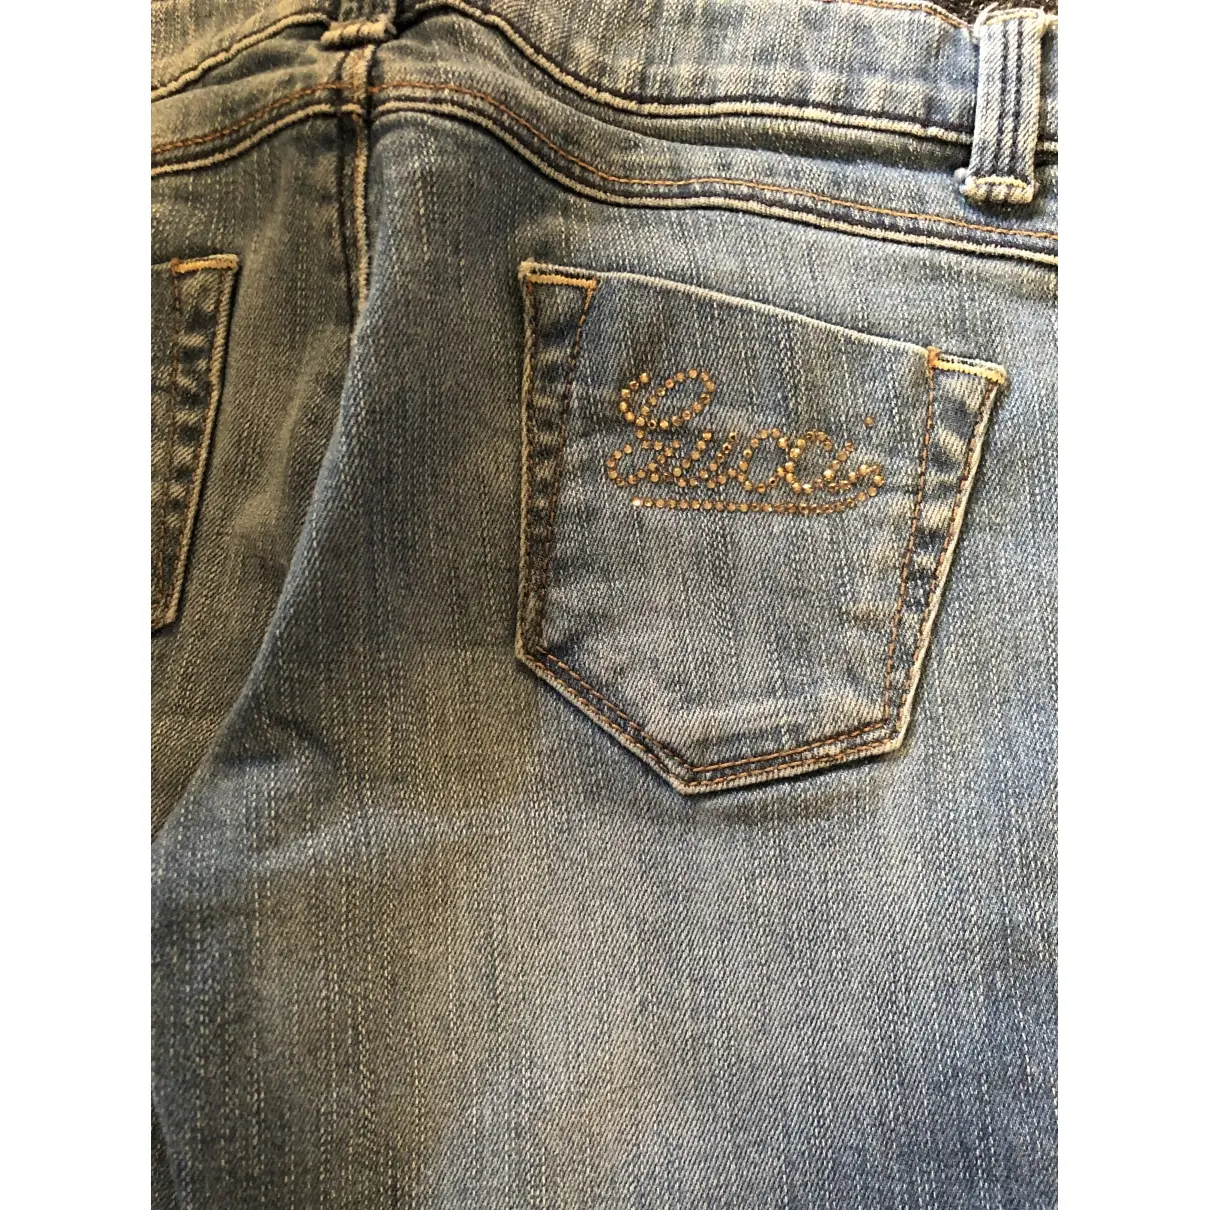 Buy Gucci Blue Denim - Jeans Trousers online